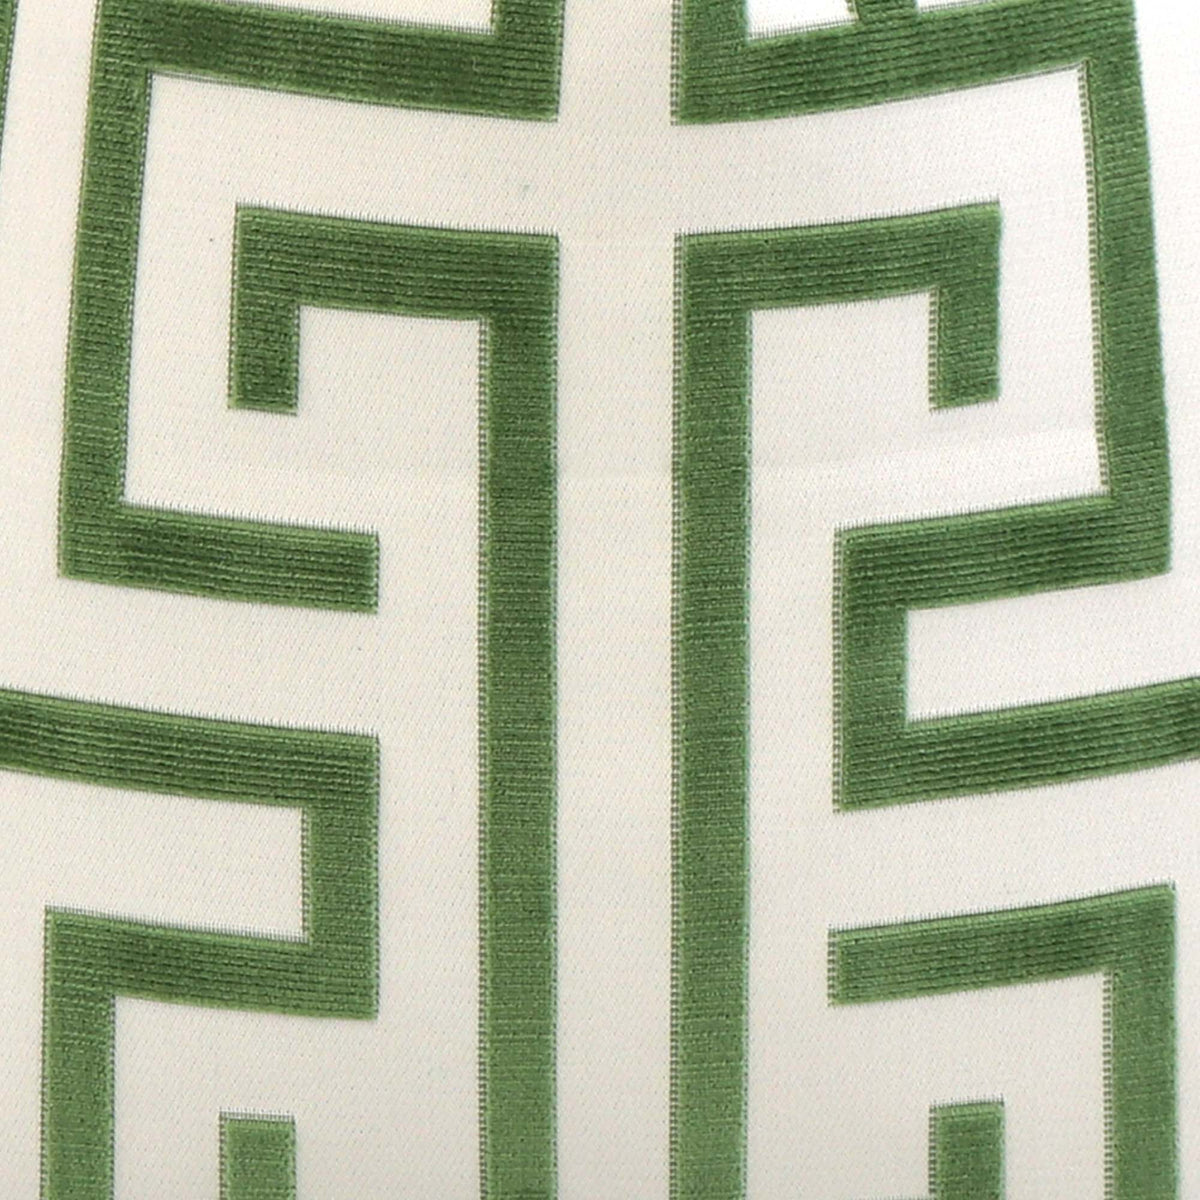 Ming Trail Velvet Green / 4x4 inch Fabric Swatch